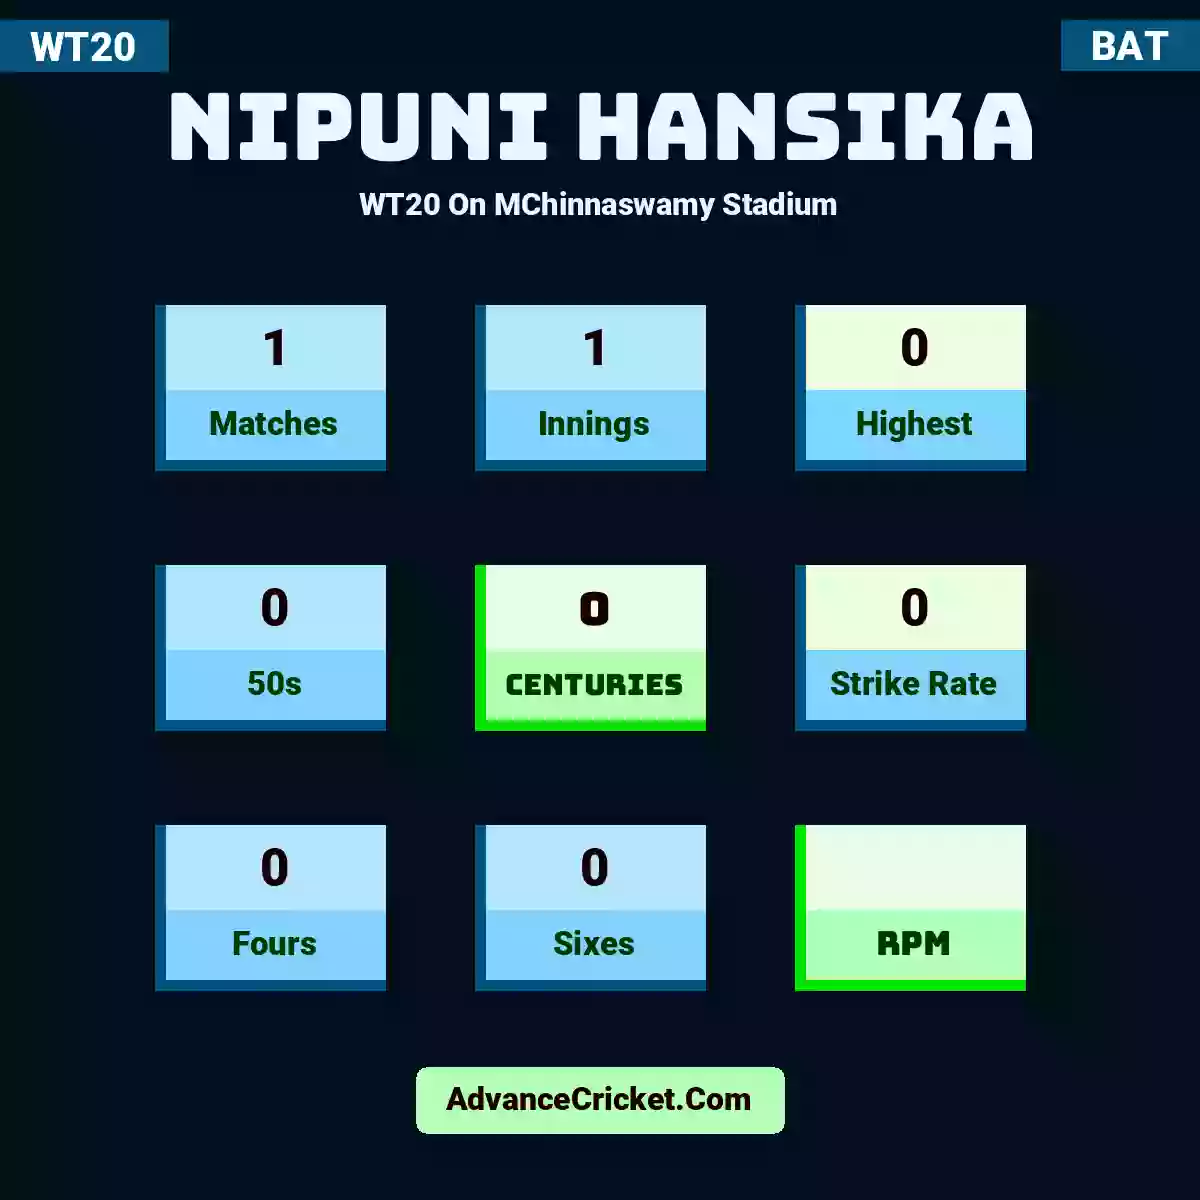 Nipuni Hansika WT20  On MChinnaswamy Stadium, Nipuni Hansika played 1 matches, scored 0 runs as highest, 0 half-centuries, and 0 centuries, with a strike rate of 0. N.Hansika hit 0 fours and 0 sixes.